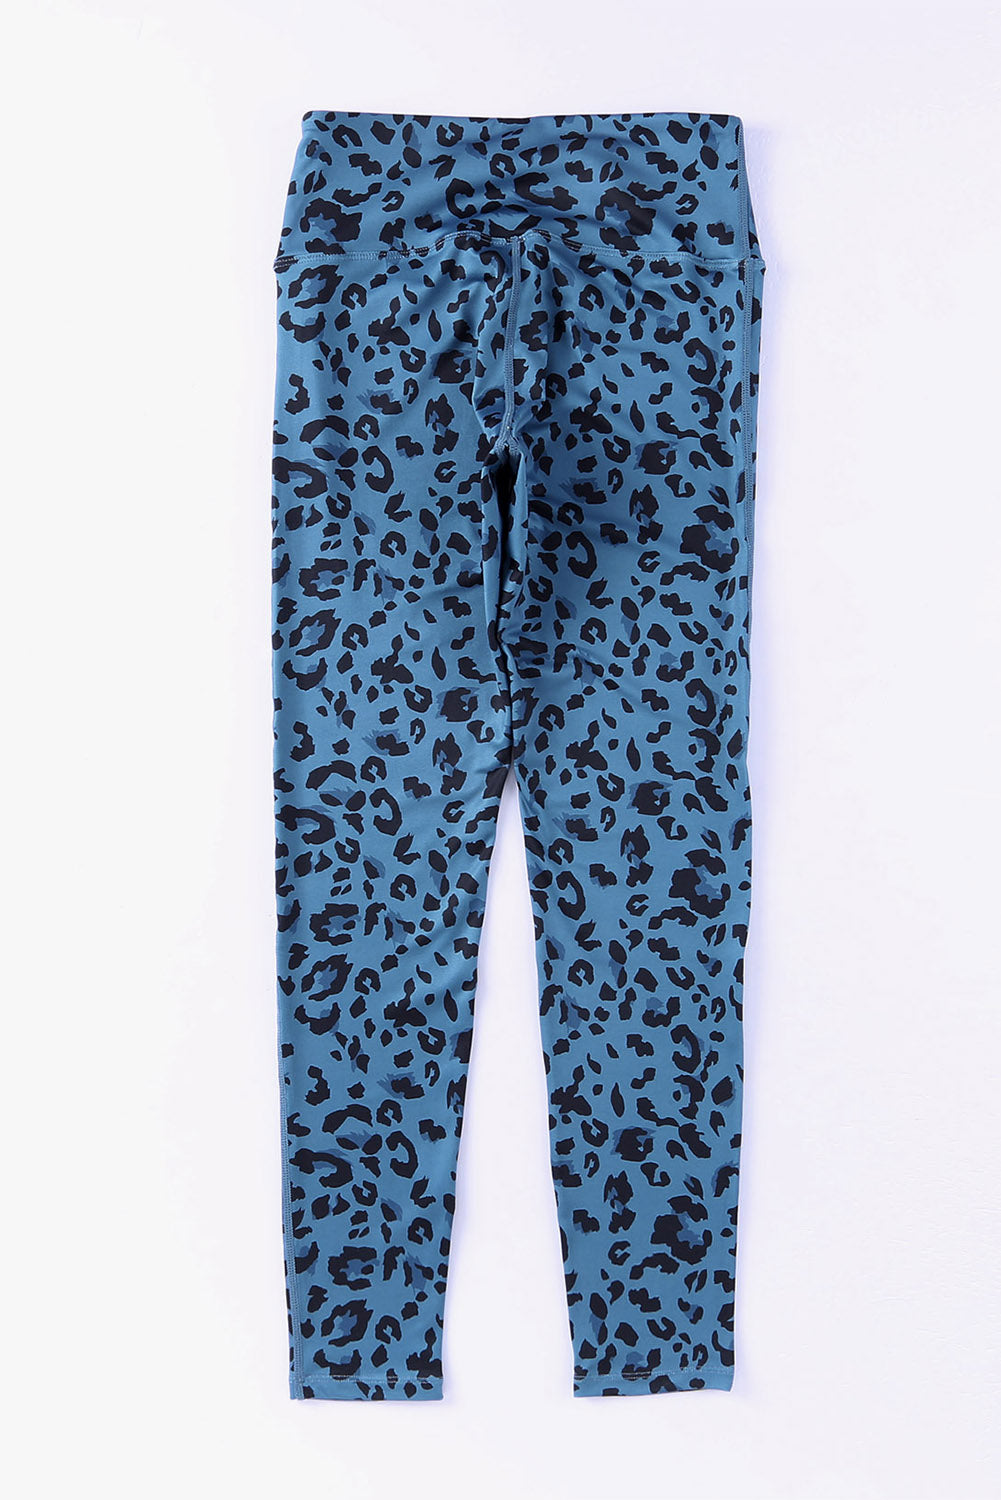 Leopard Print Wide Waistband Leggings - Sky Blue / S Apparel & Accessories Wynter 4 All Seasons